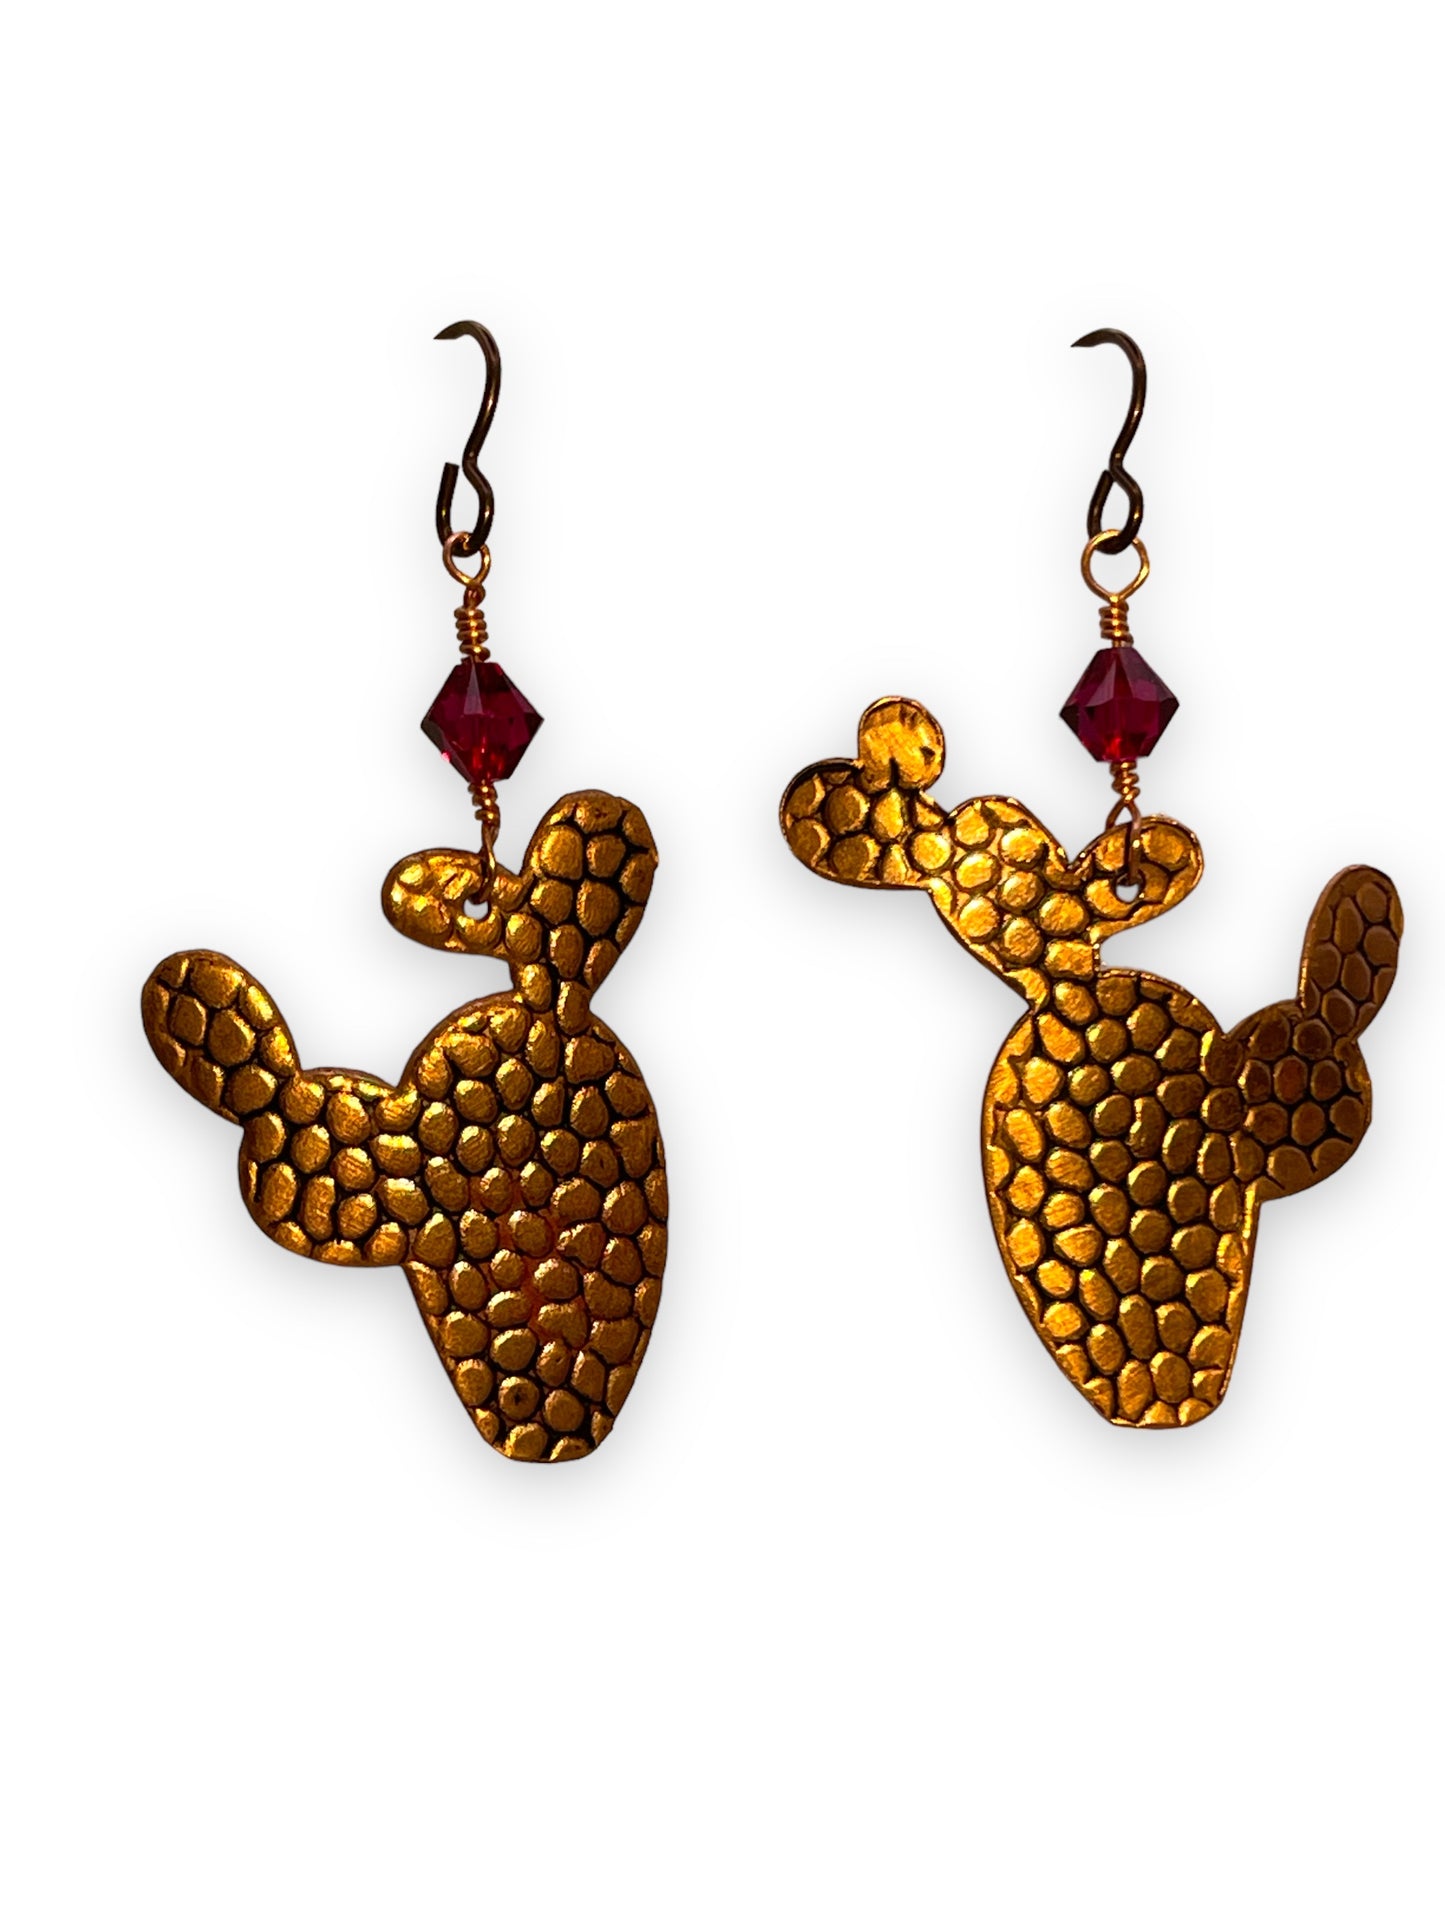 Copper Prickly Pear earrings